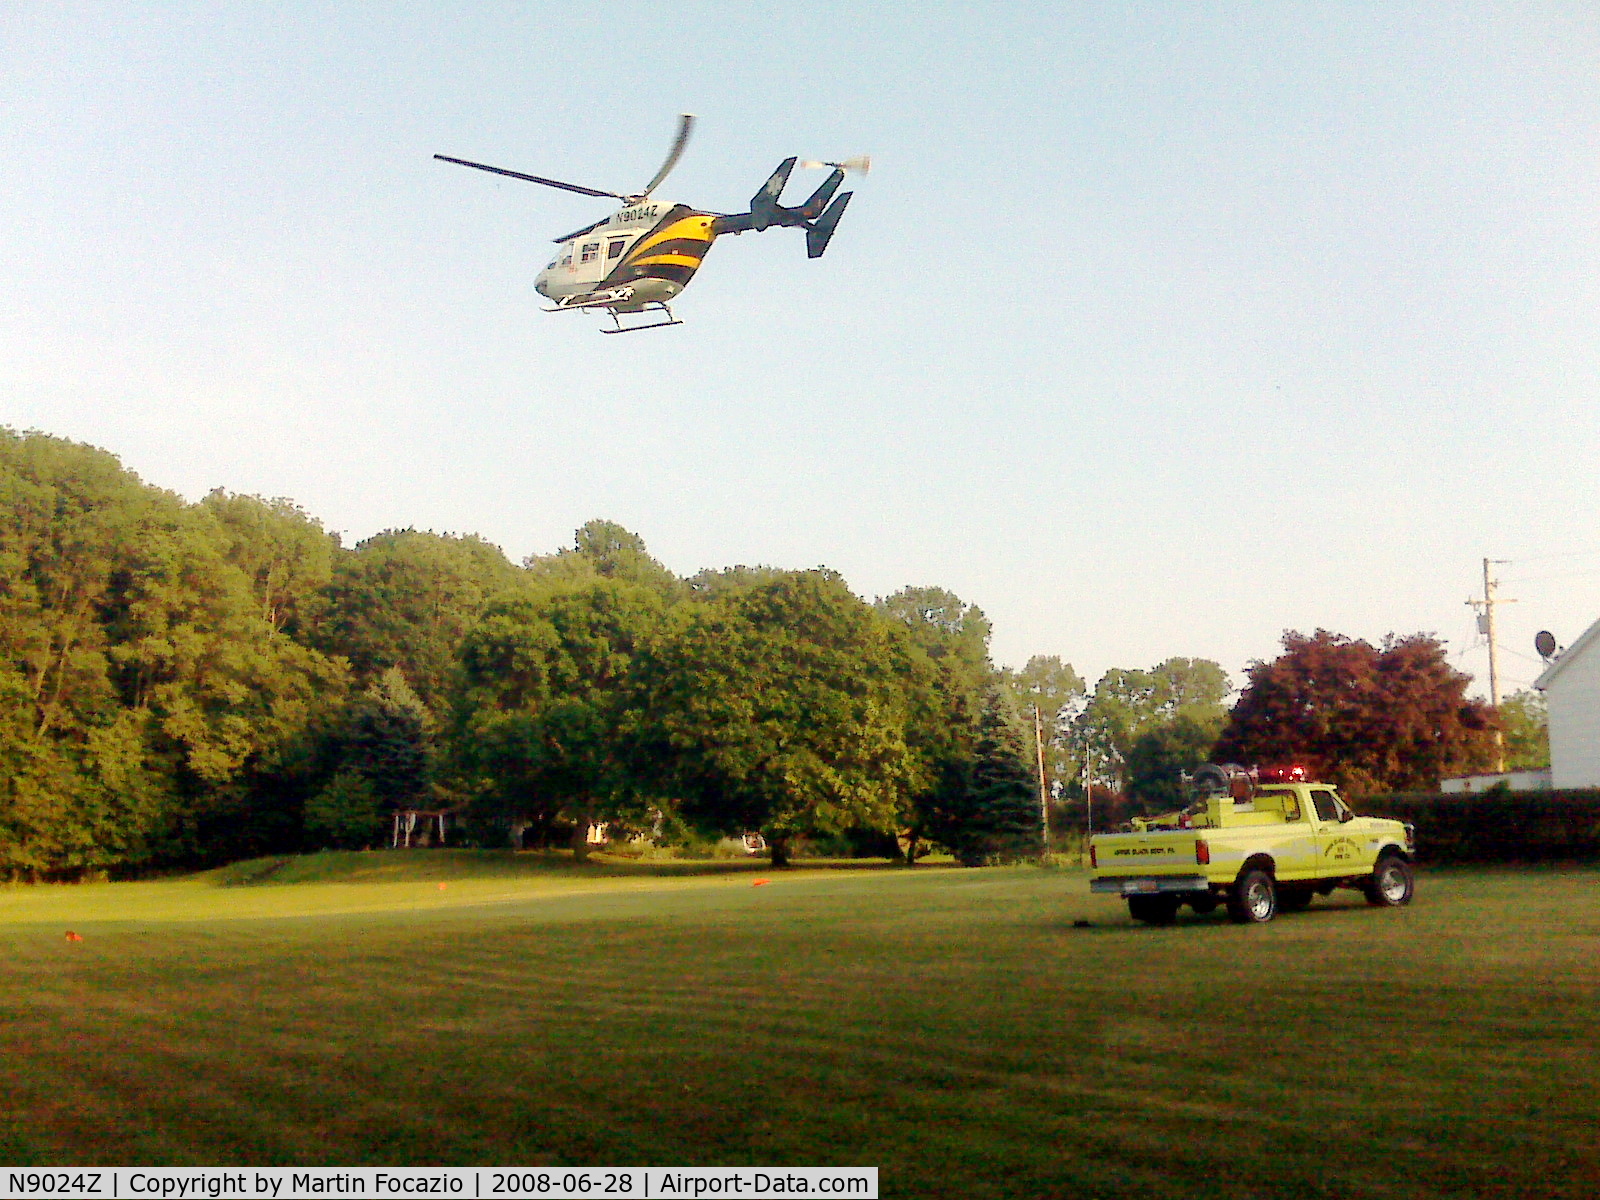 N9024Z, Eurocopter-Kawasaki BK-117A-4 C/N 7134, Helo N2904Z Arriving for an air medical evacuation in Upper Black Eddy Pennsylvania.